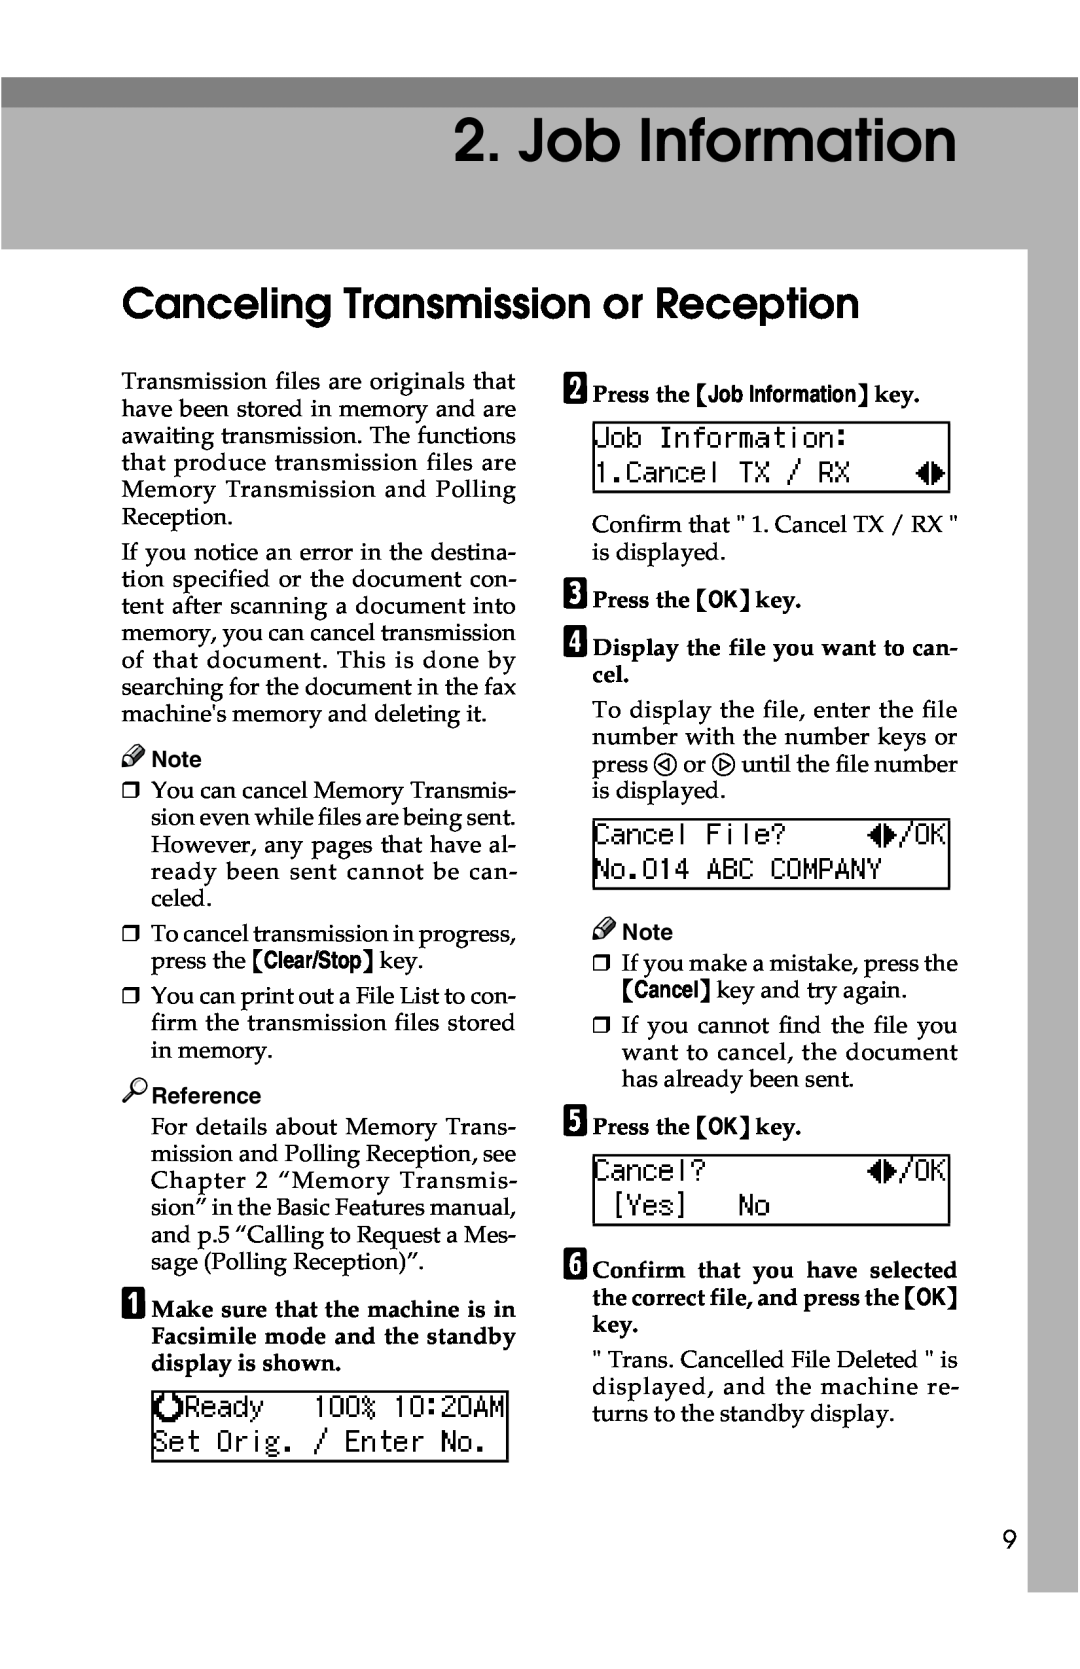 Savin G1619 manual Canceling Transmission or Reception, B Press the Job Information key 